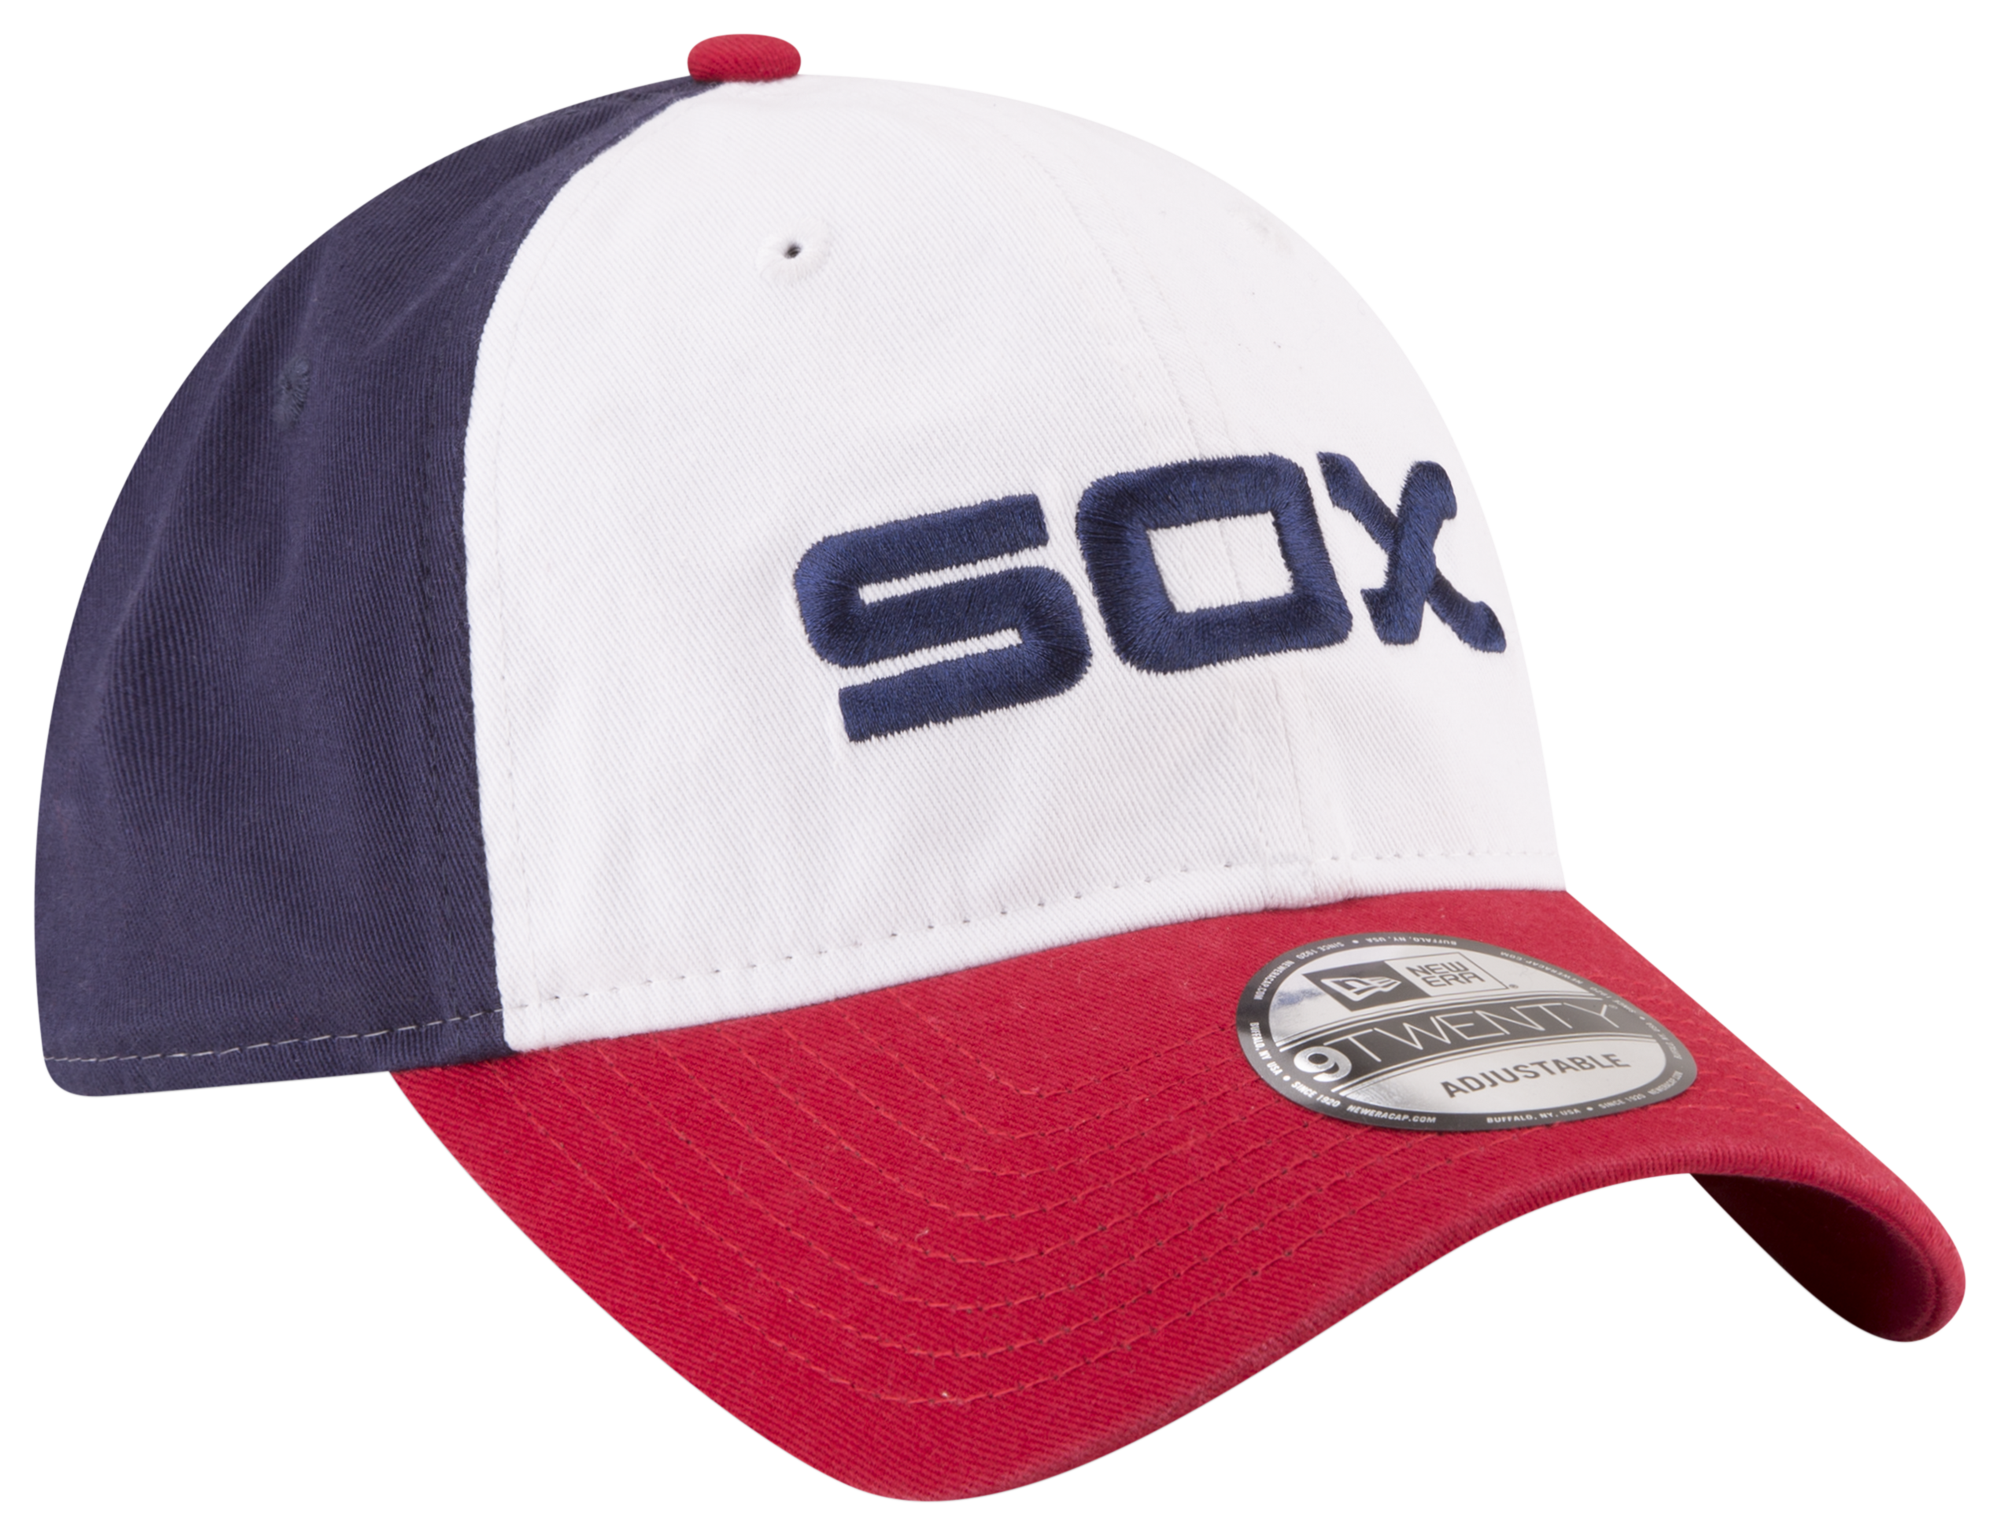 New Era White Sox 2015 Alternate Cap